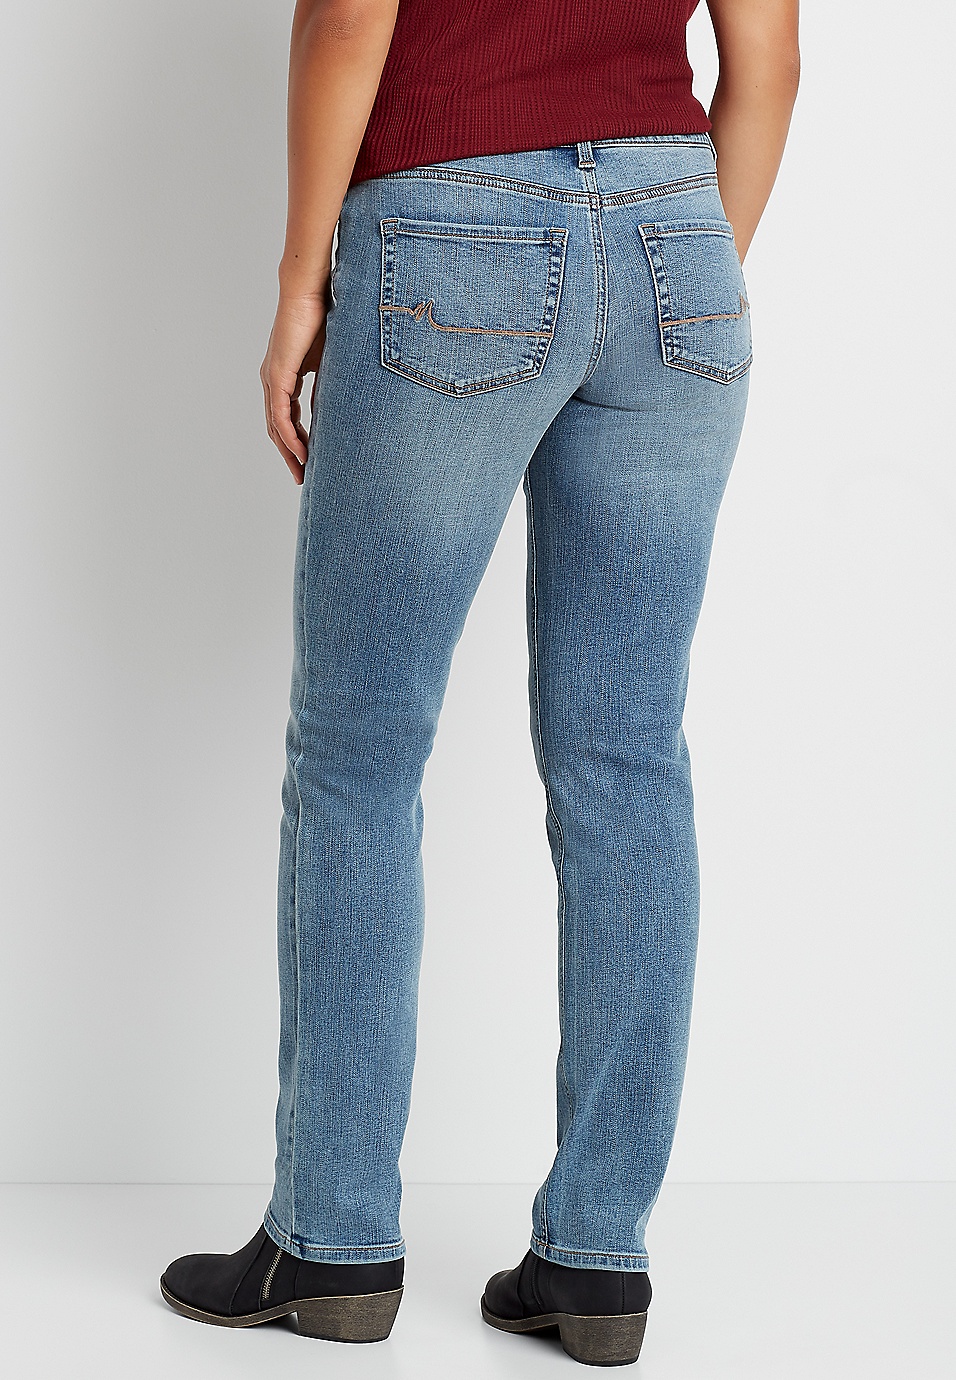 Maurices Size 7/8 Regular Jeans Design on Pockets 32 1/2 Inseam